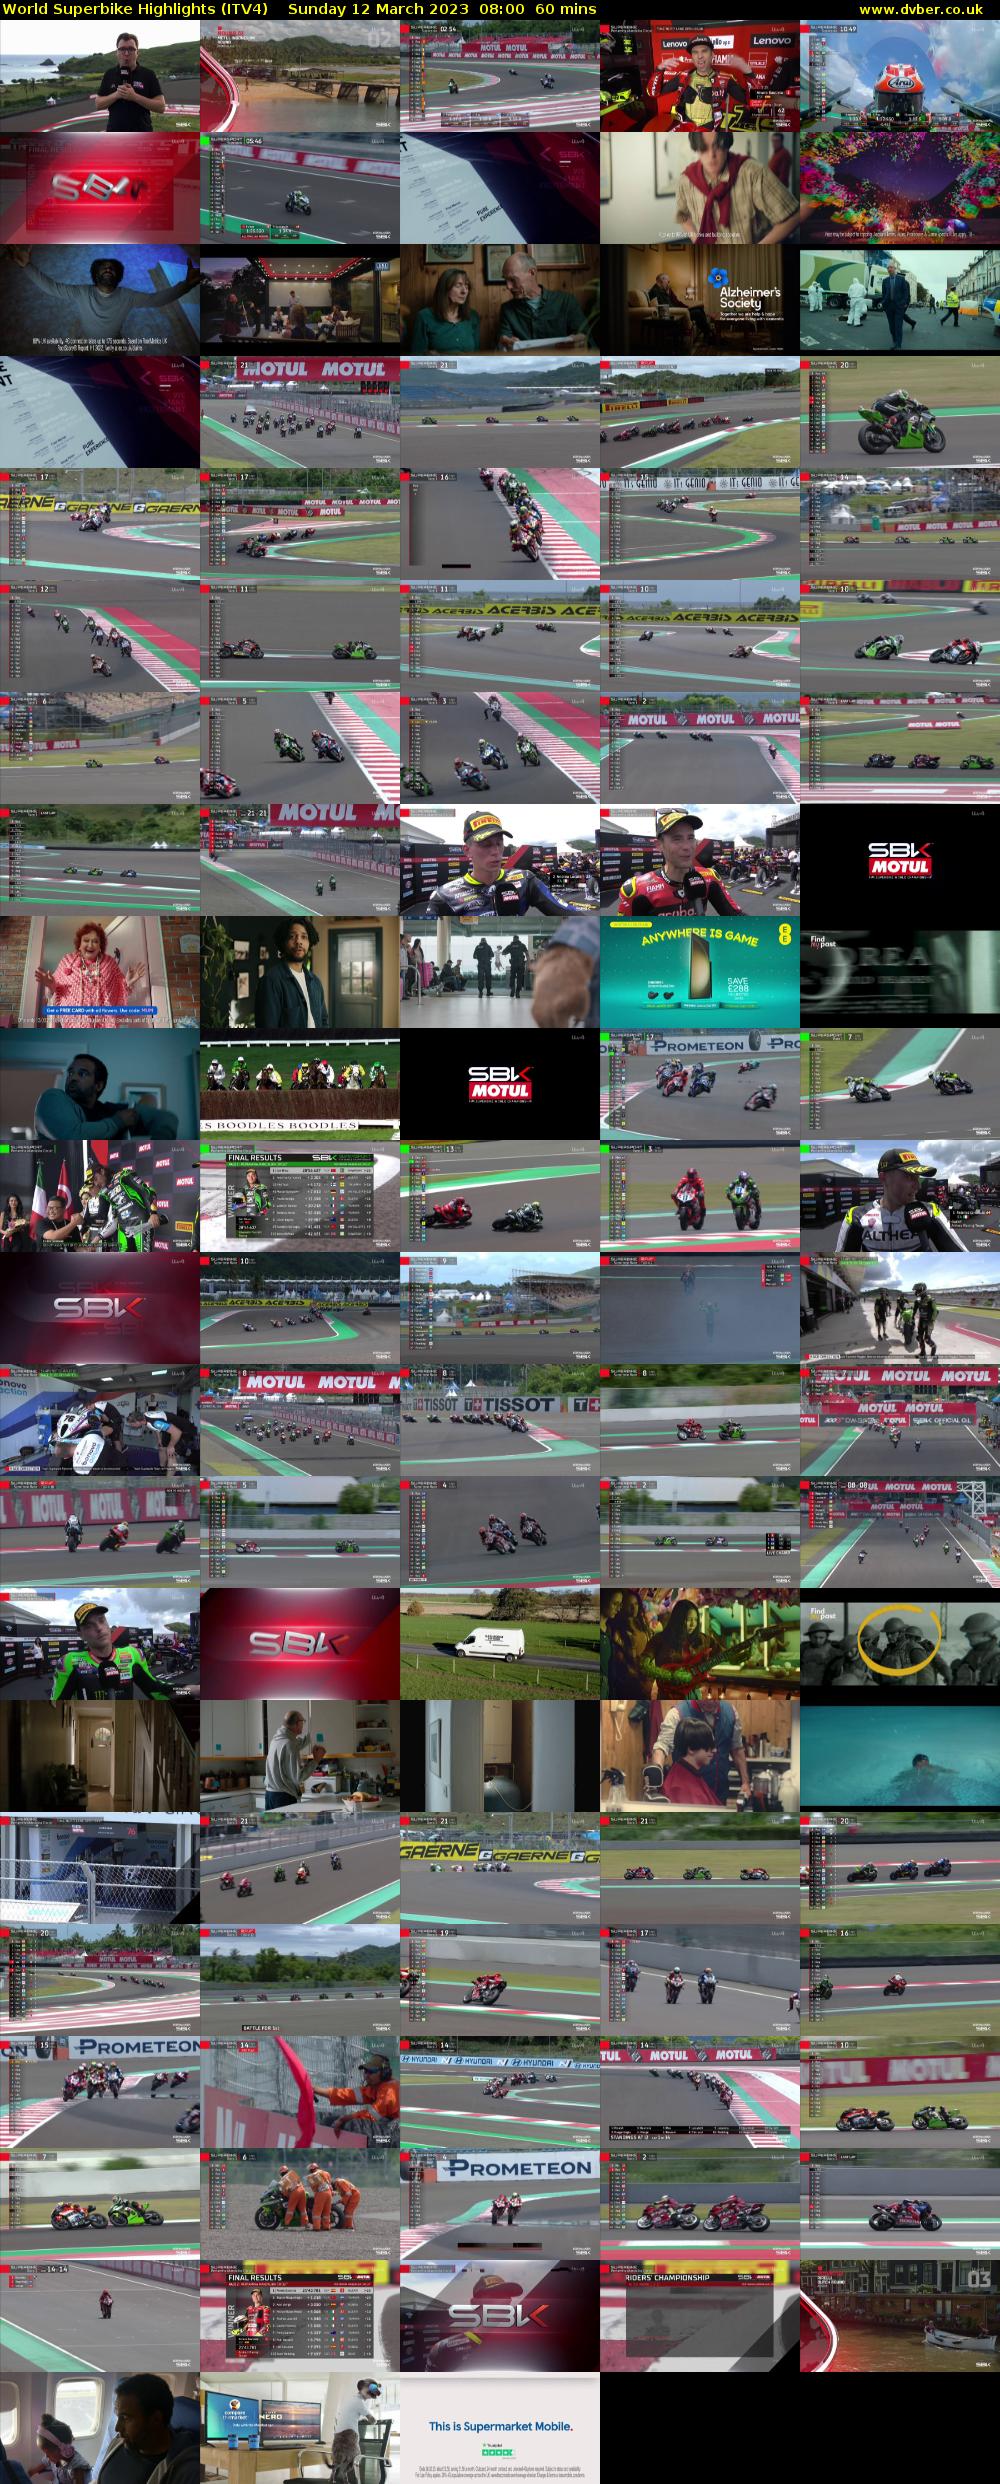 World Superbike Highlights (ITV4) Sunday 12 March 2023 08:00 - 09:00